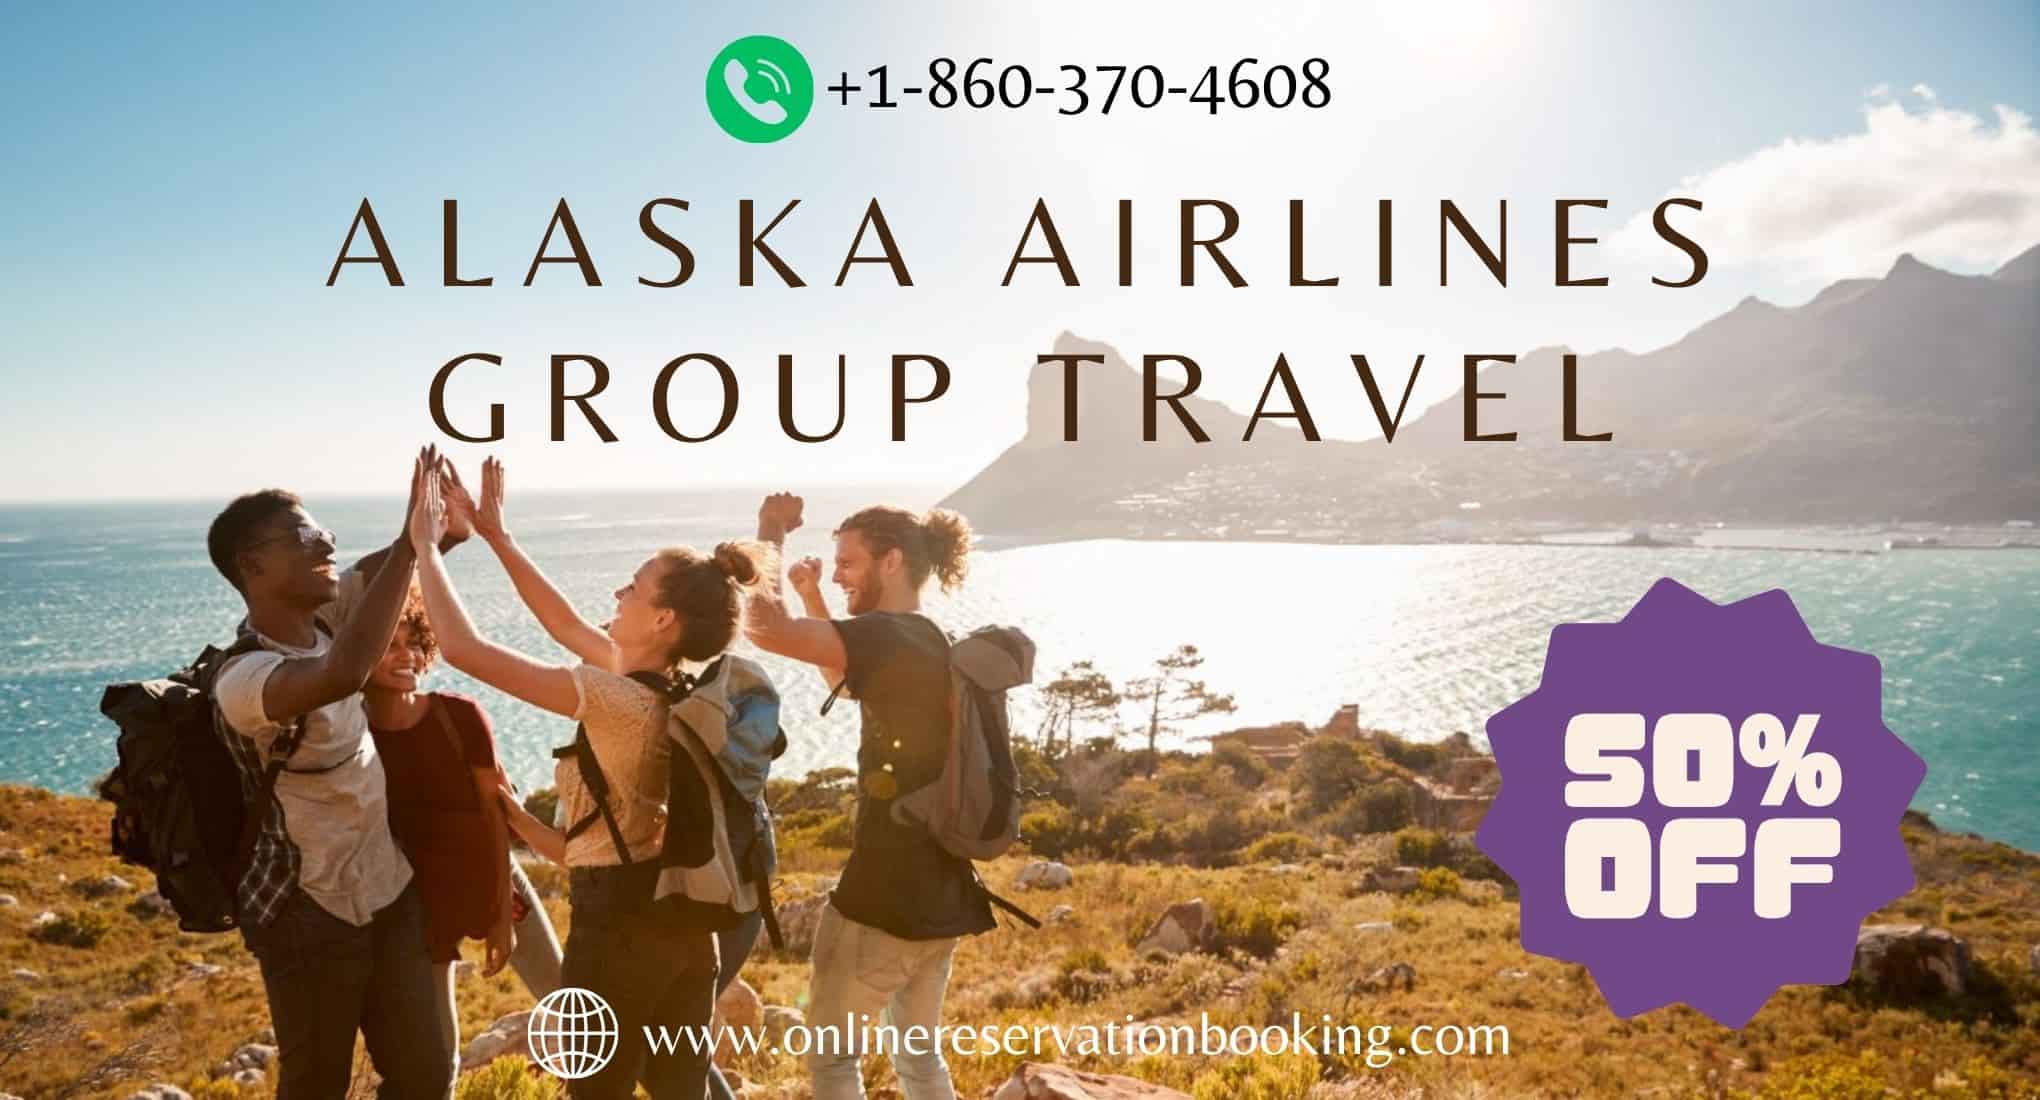 How do I Book Alaska Airlines Group Travel Flights?